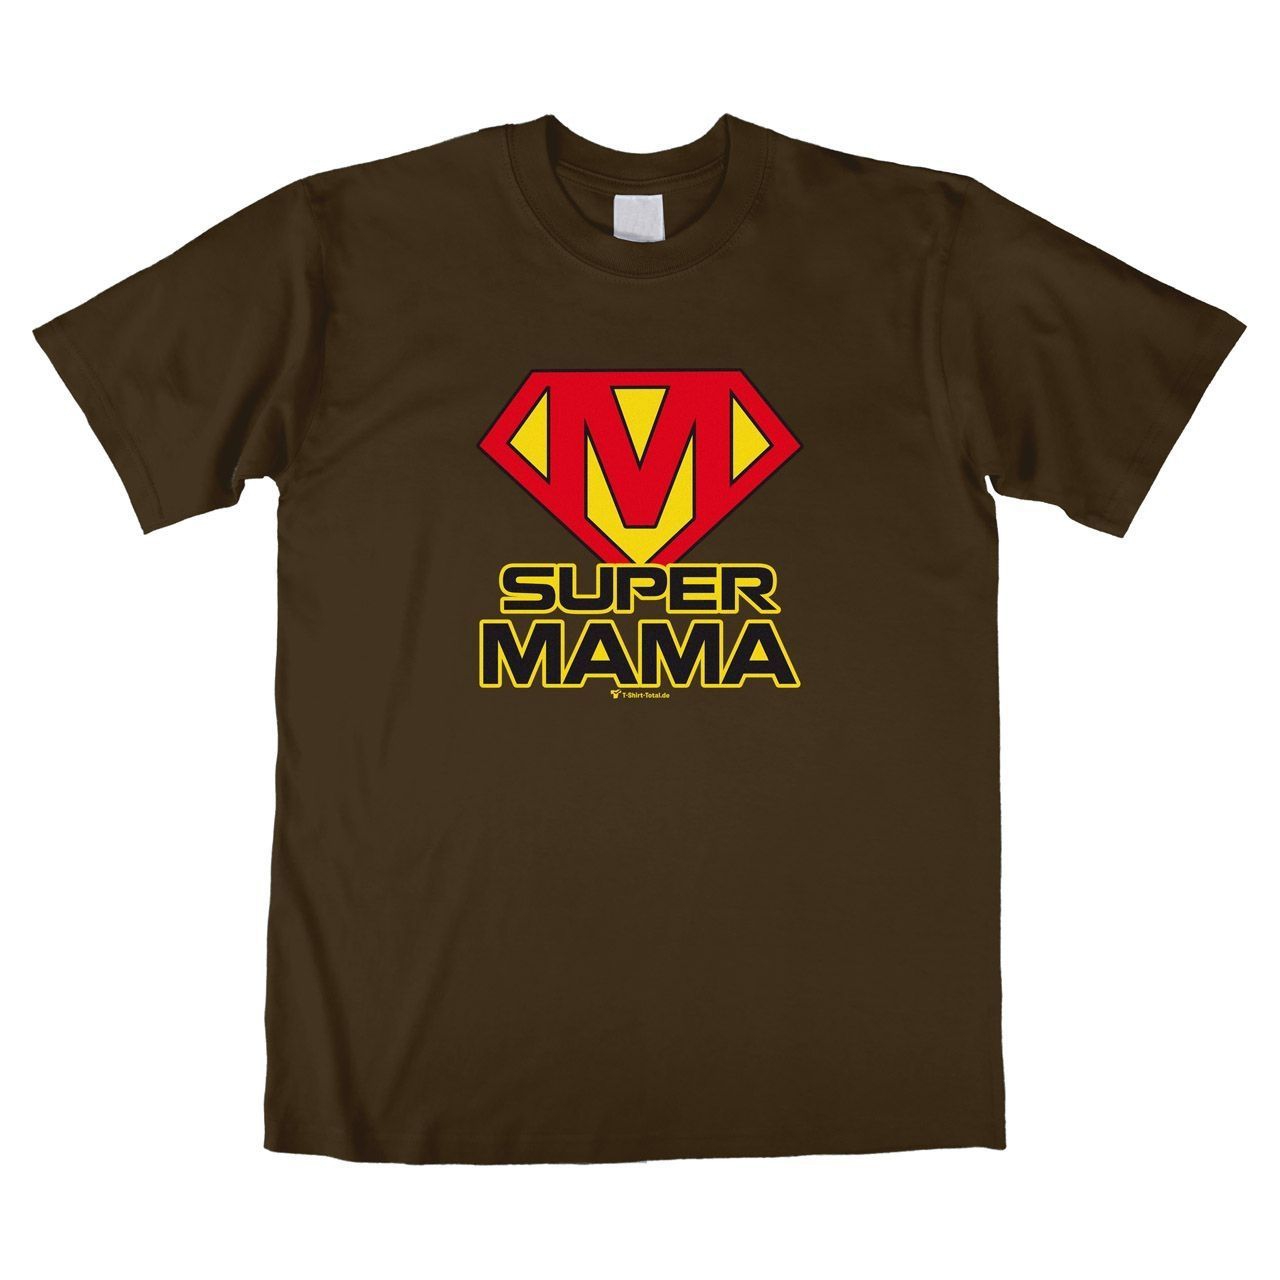 Super Mama Unisex T-Shirt braun Small